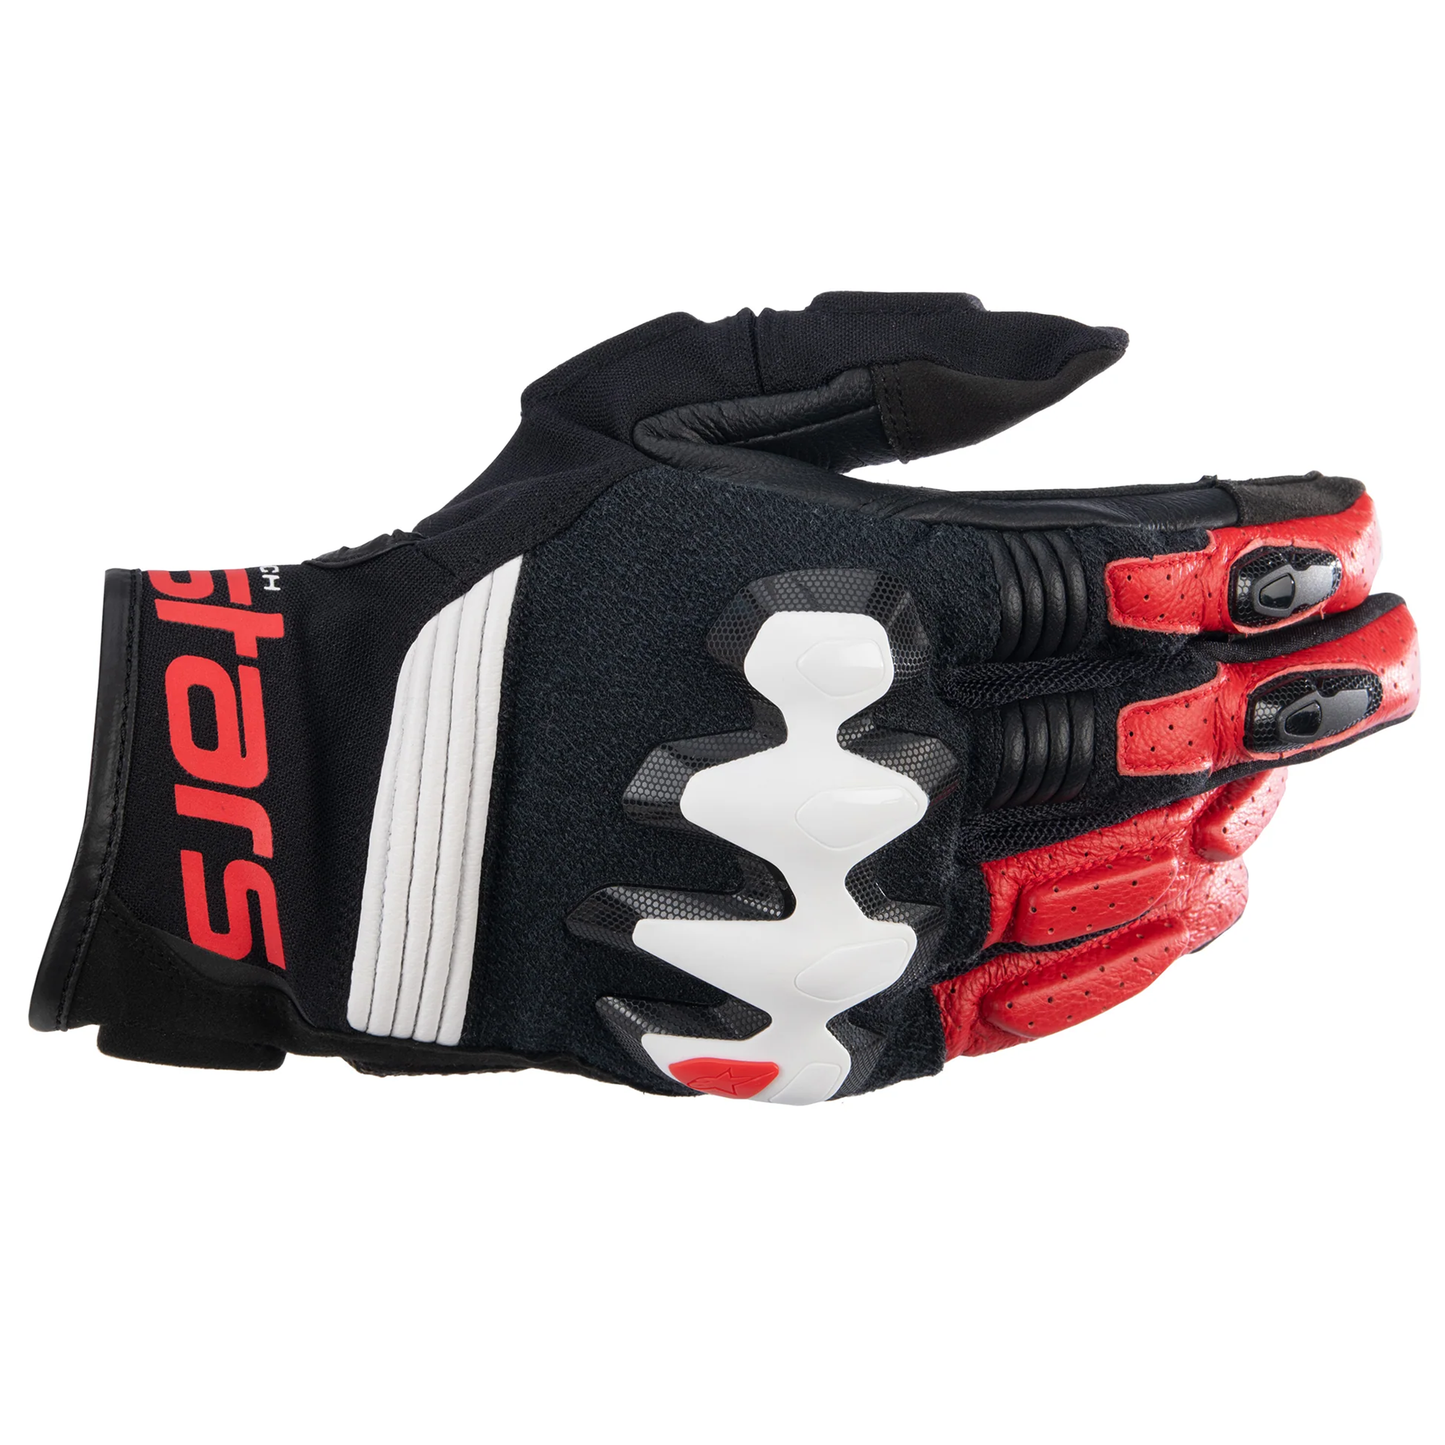 Alpinestars Halo Leather Gloves - Black/White/Bright Red